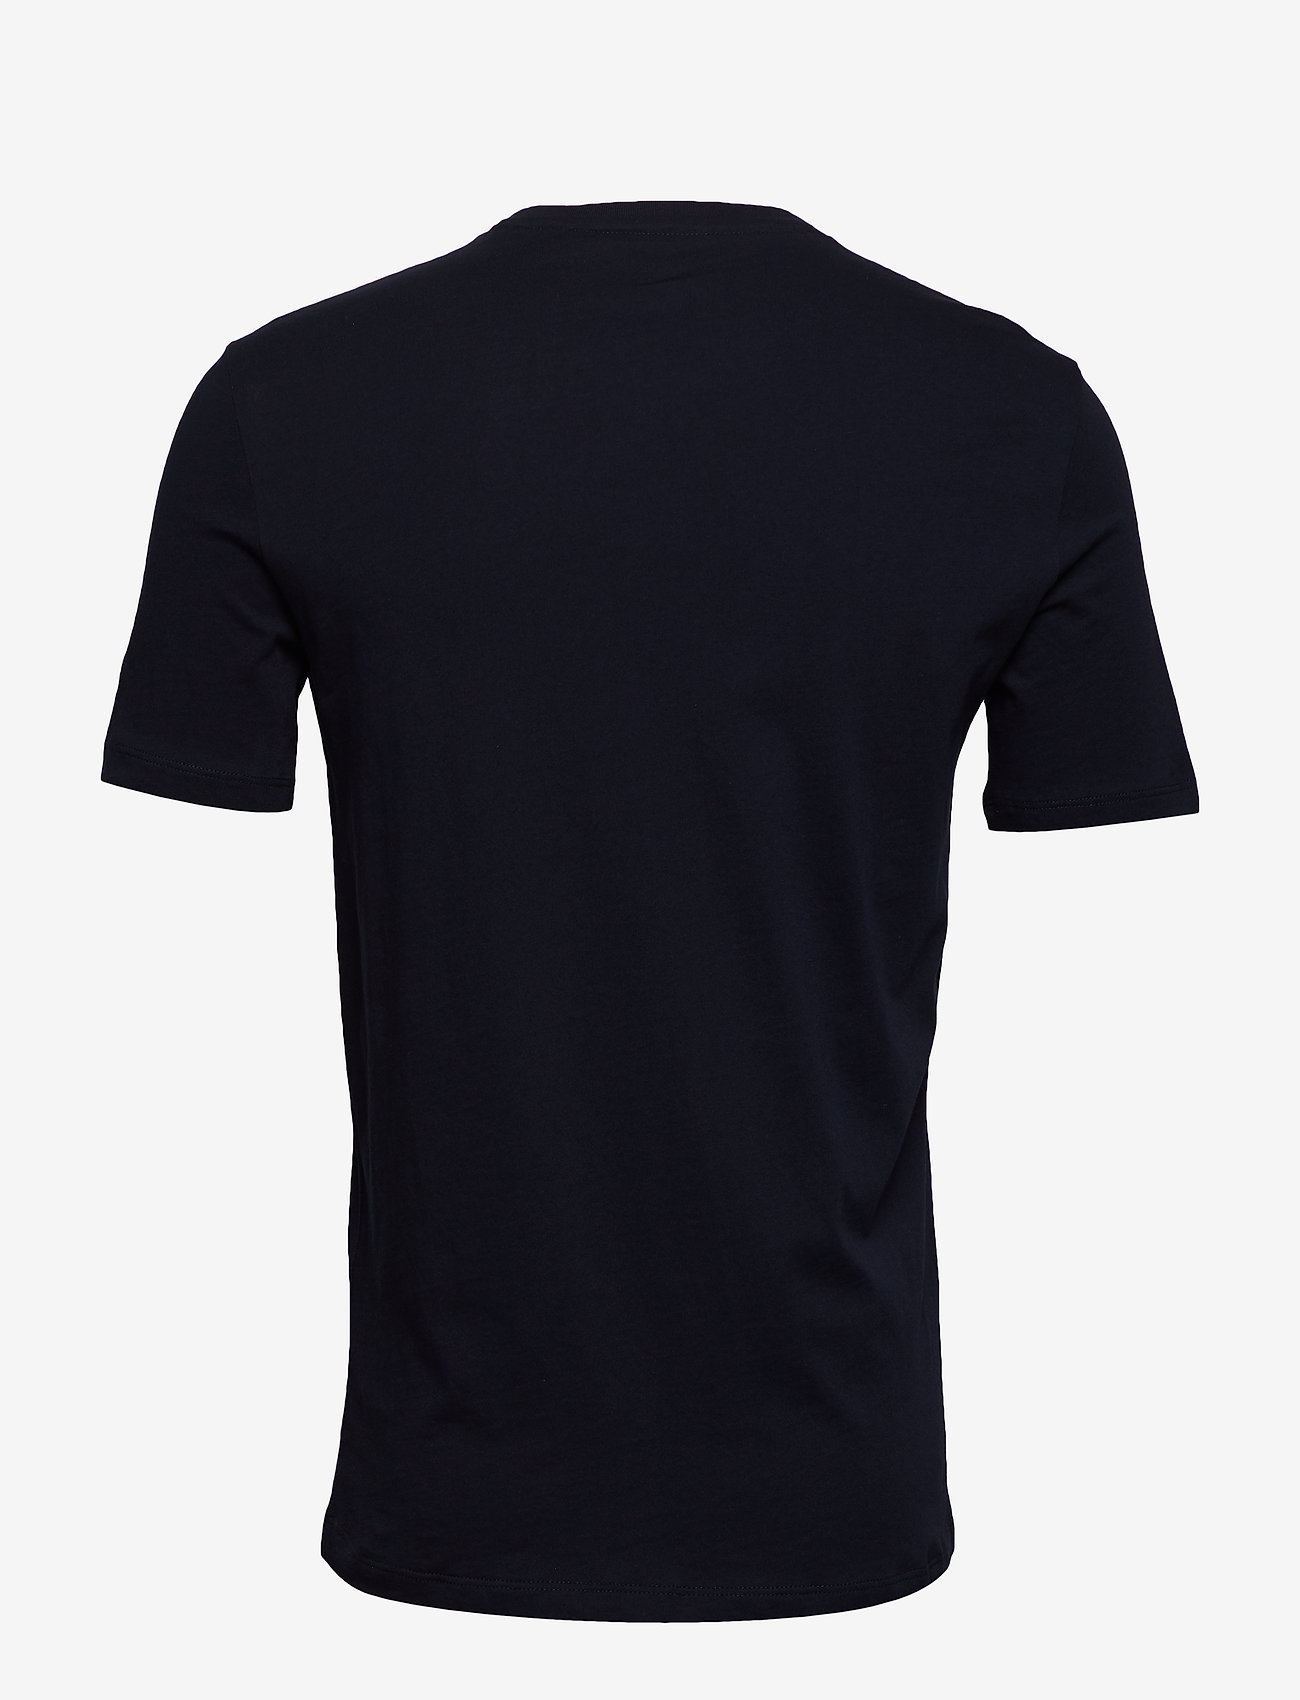 Armani Exchange - T-SHIRT - short-sleeved t-shirts - navy - 1